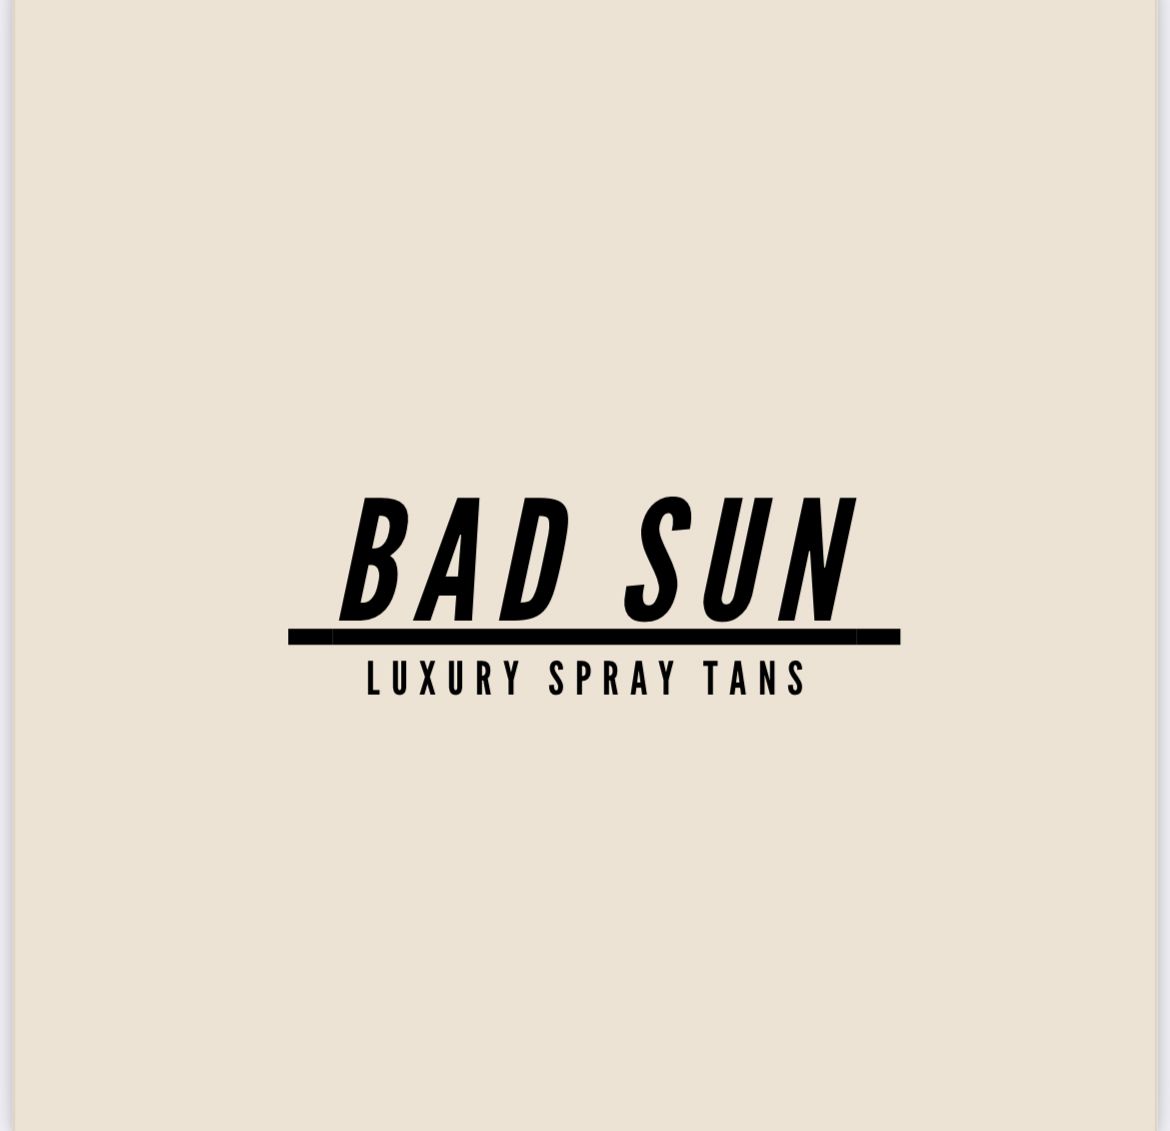 Bad Sun Luxury Spray